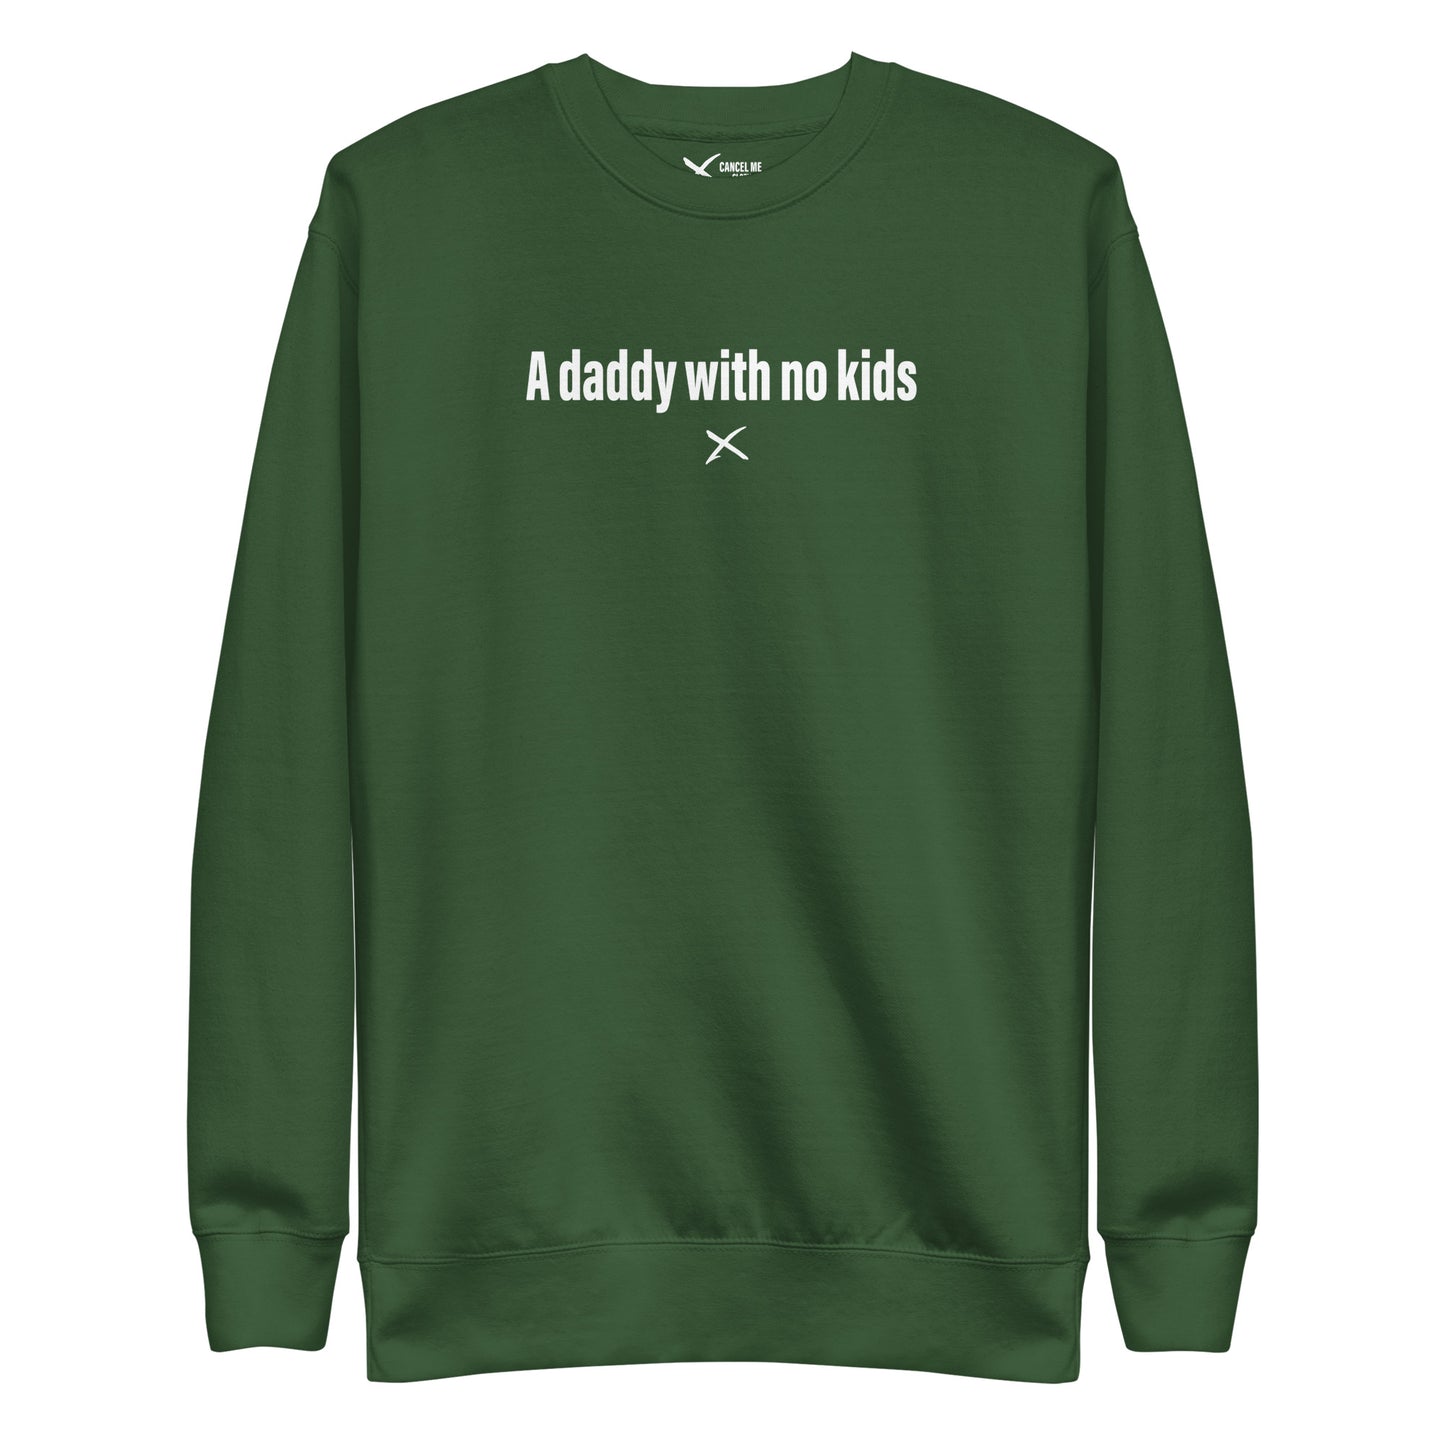 A daddy with no kids - Sweatshirt